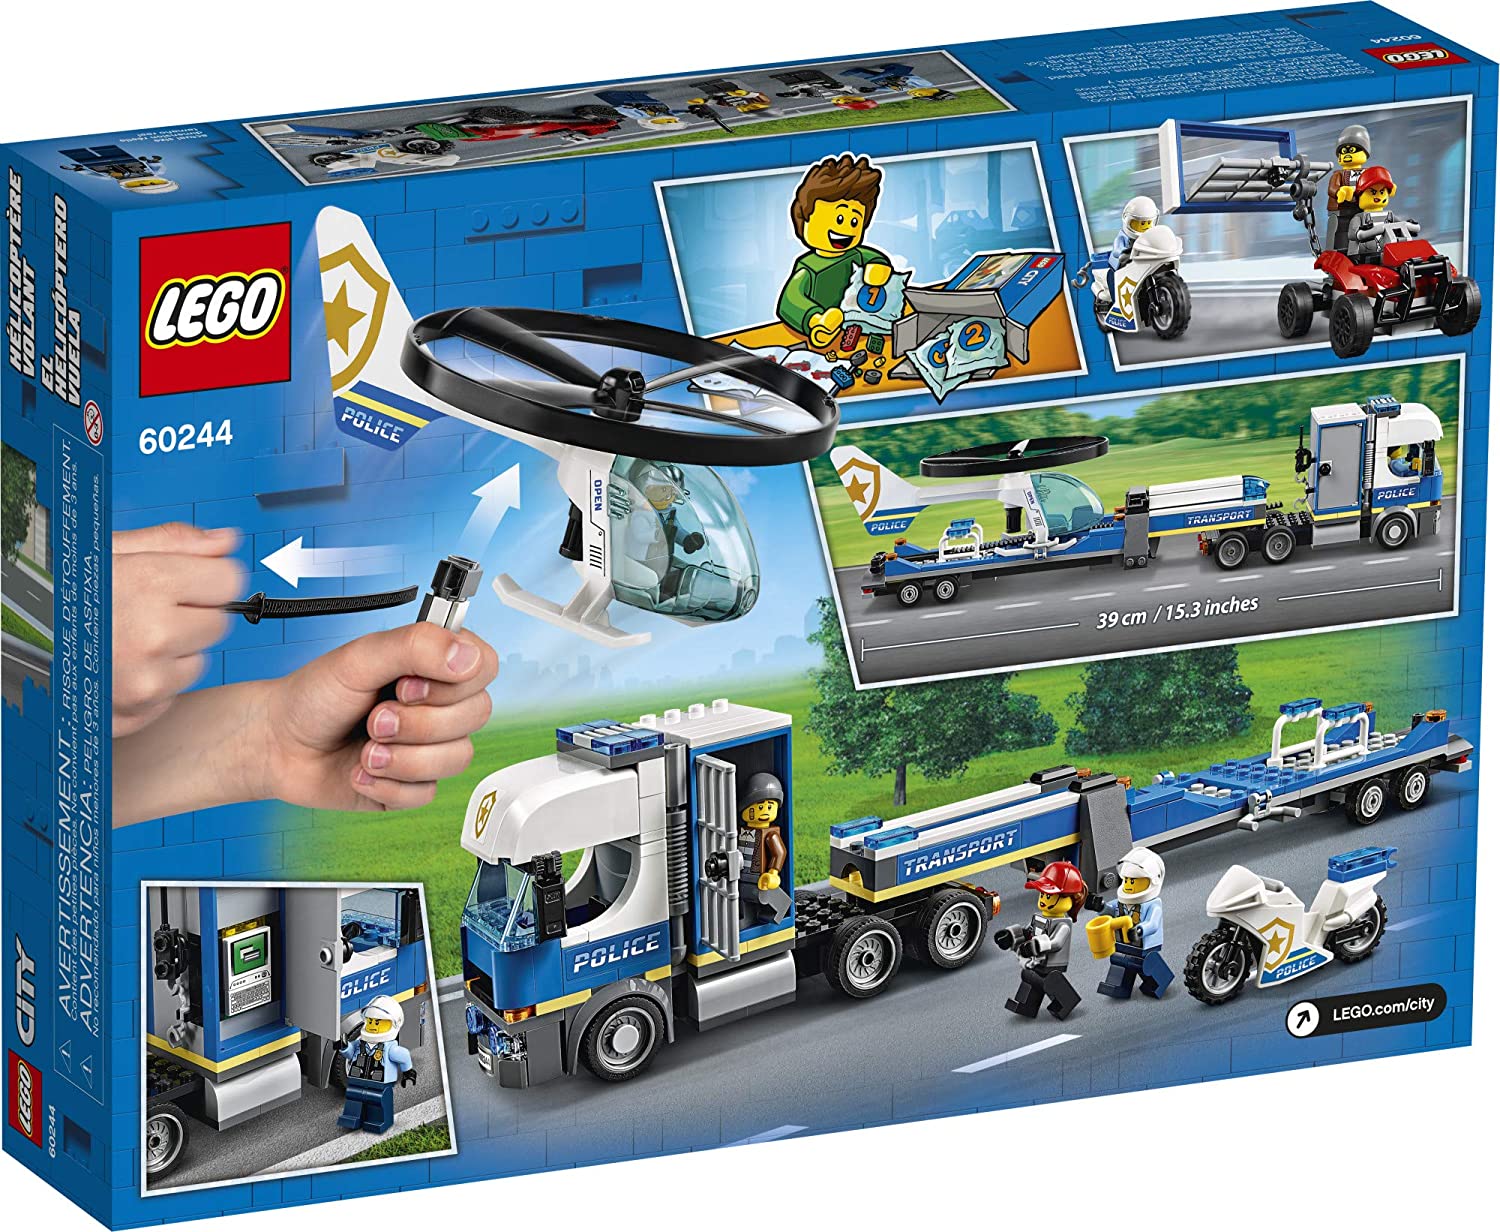 Oversætte Udfyld mavepine LEGO® CITY 60244 Police Helicopter Transport (317 pieces) – AESOP'S FABLE